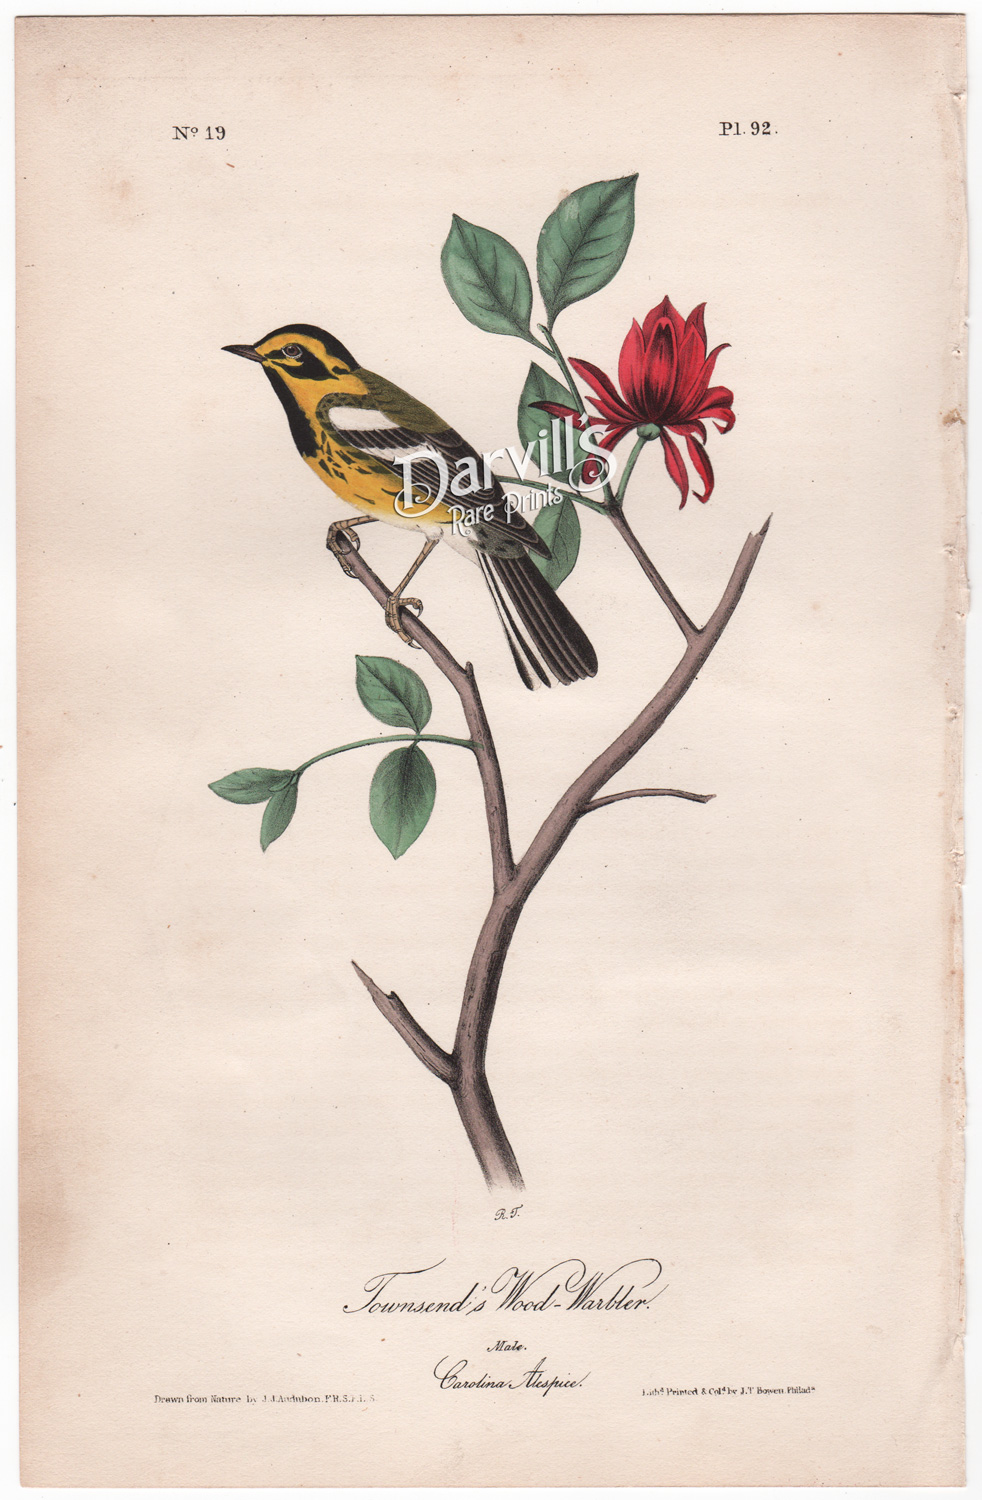 Audubon Townsend's Wood Warbler plate 92 first edition Carolina Allspice